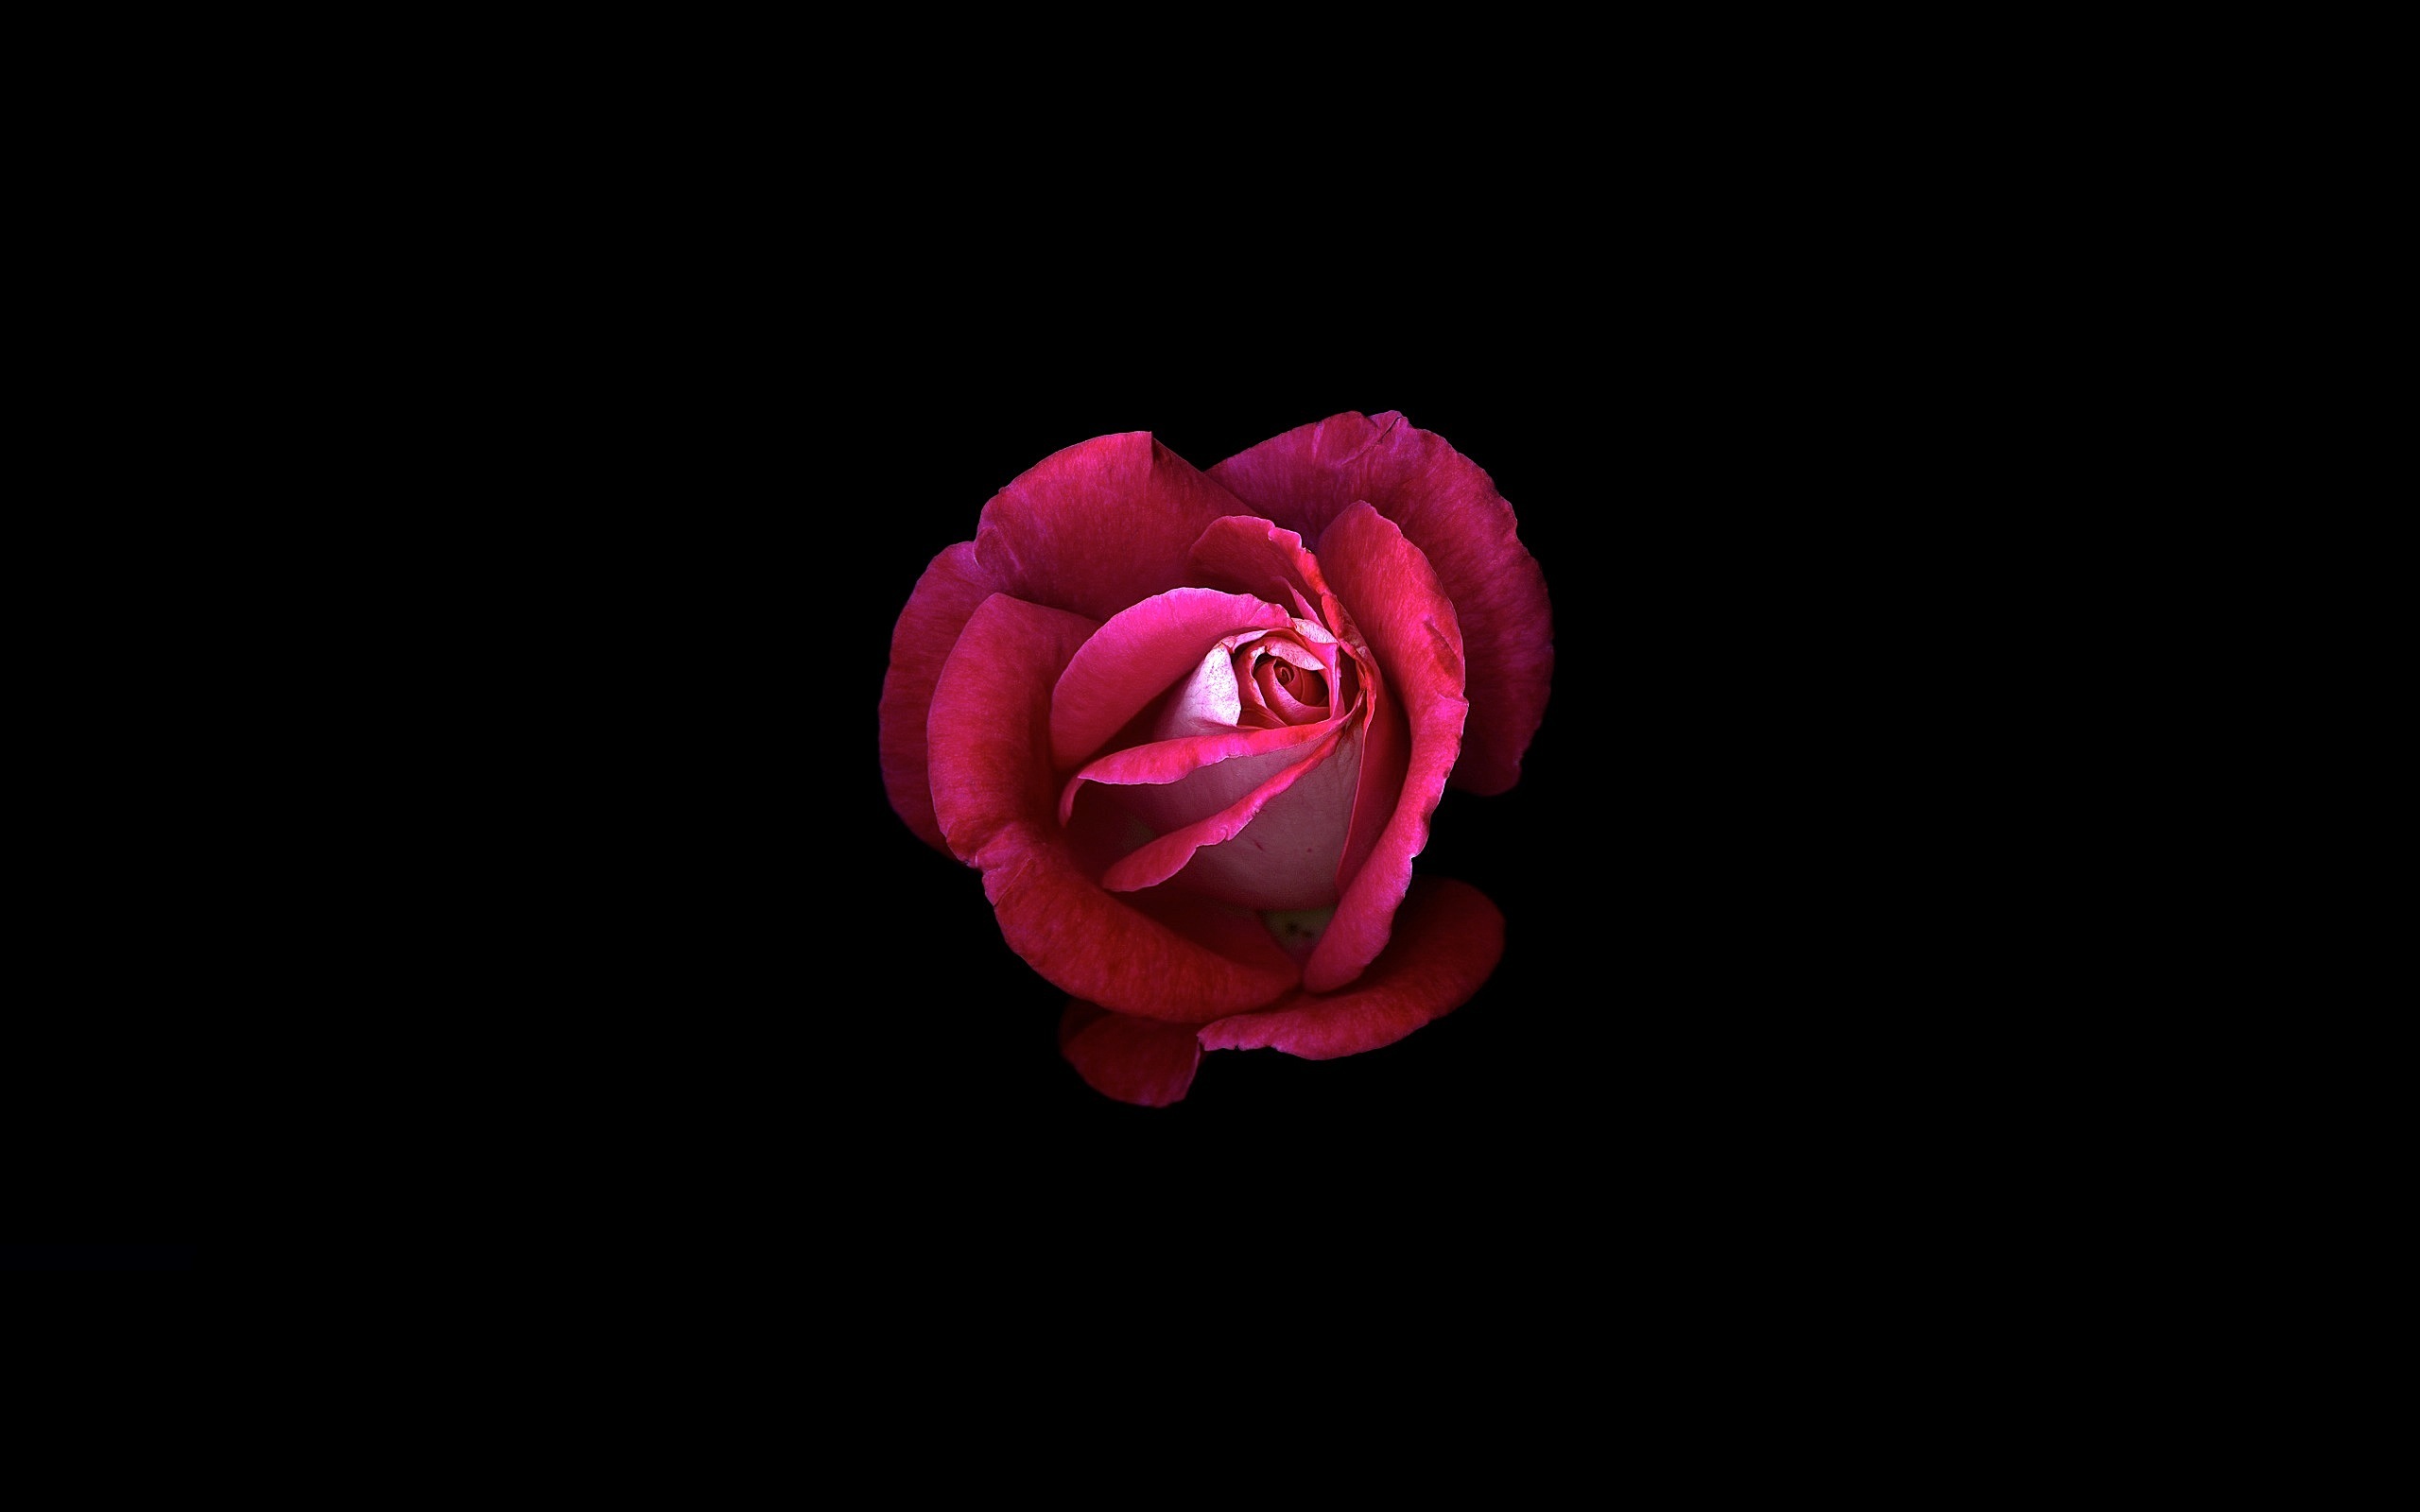 Unopened rosebud on dark background